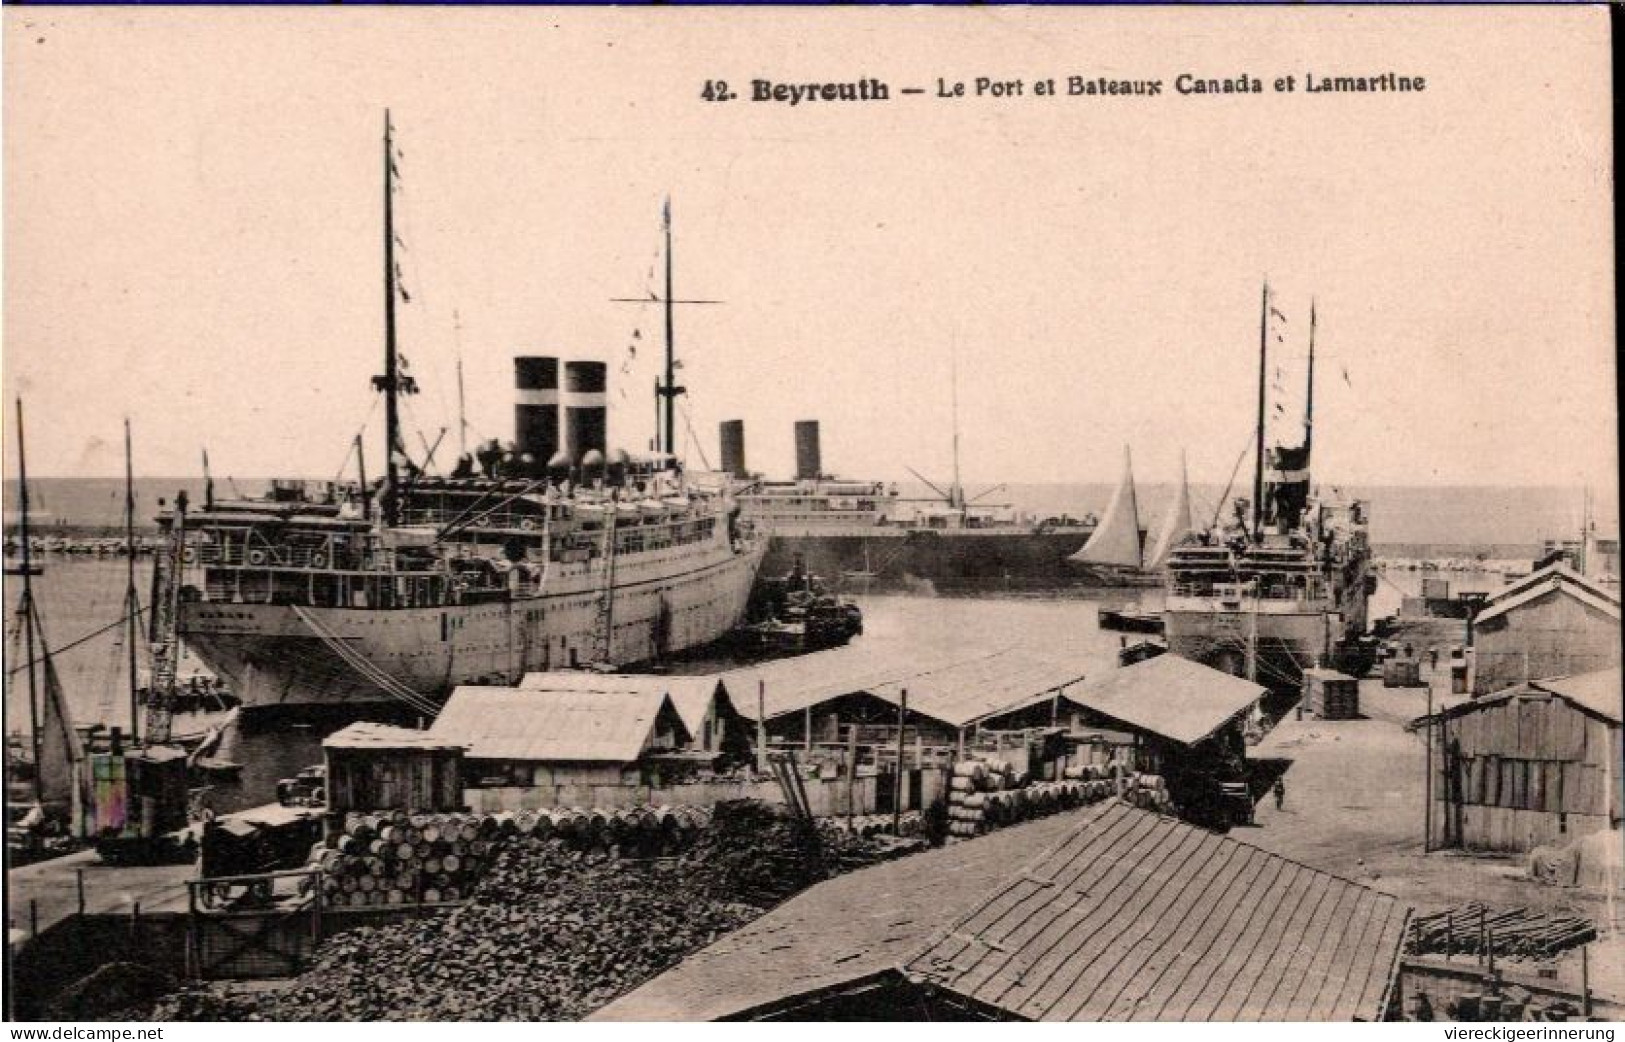 ! Cpa , Alte Ansichtskarte Aus Beirut, Beyrouth, Le Port, Hafen, Ships, Harbor, Dampfer - Libano